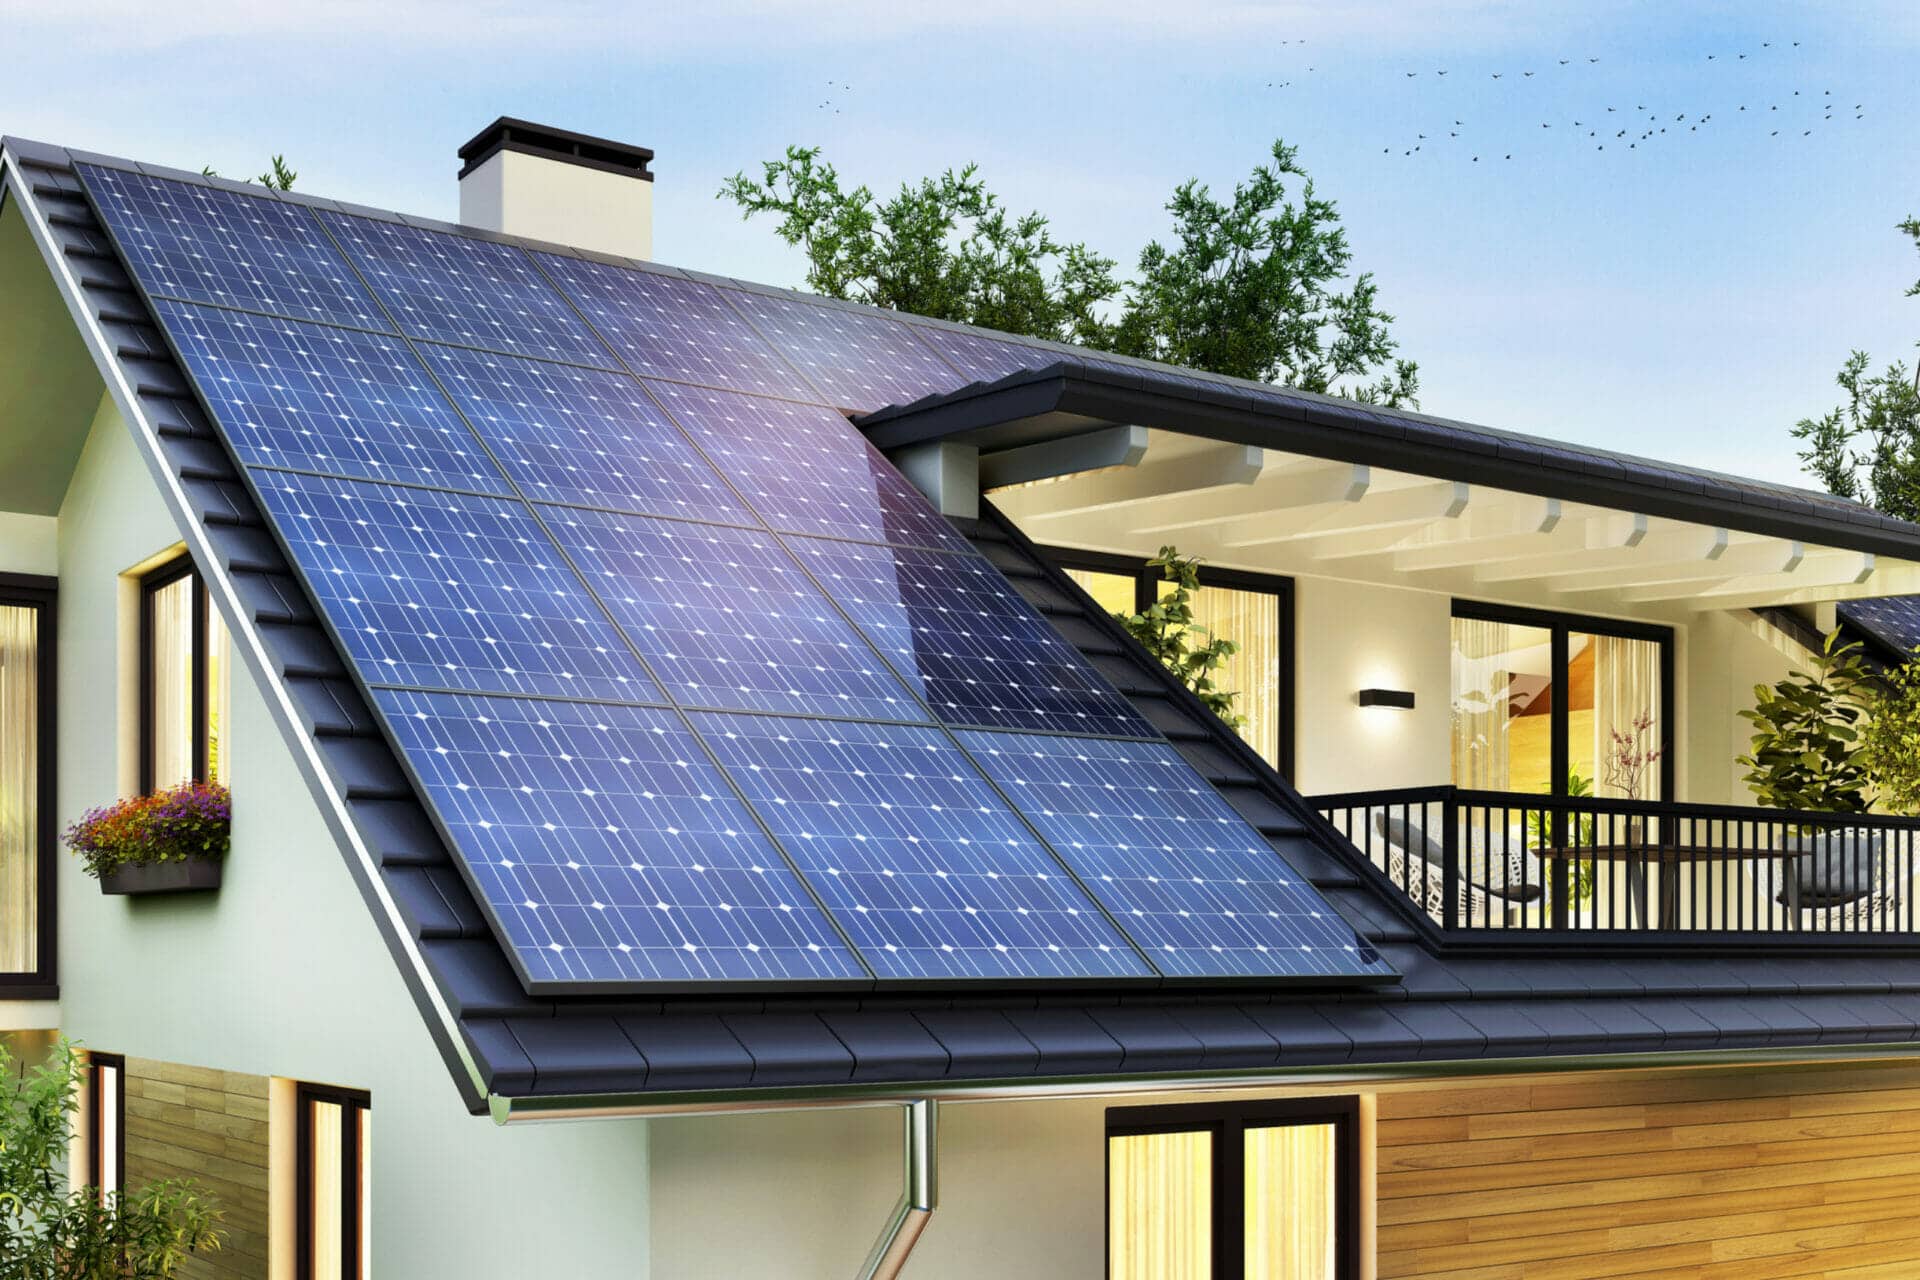 Solar Panels on Home